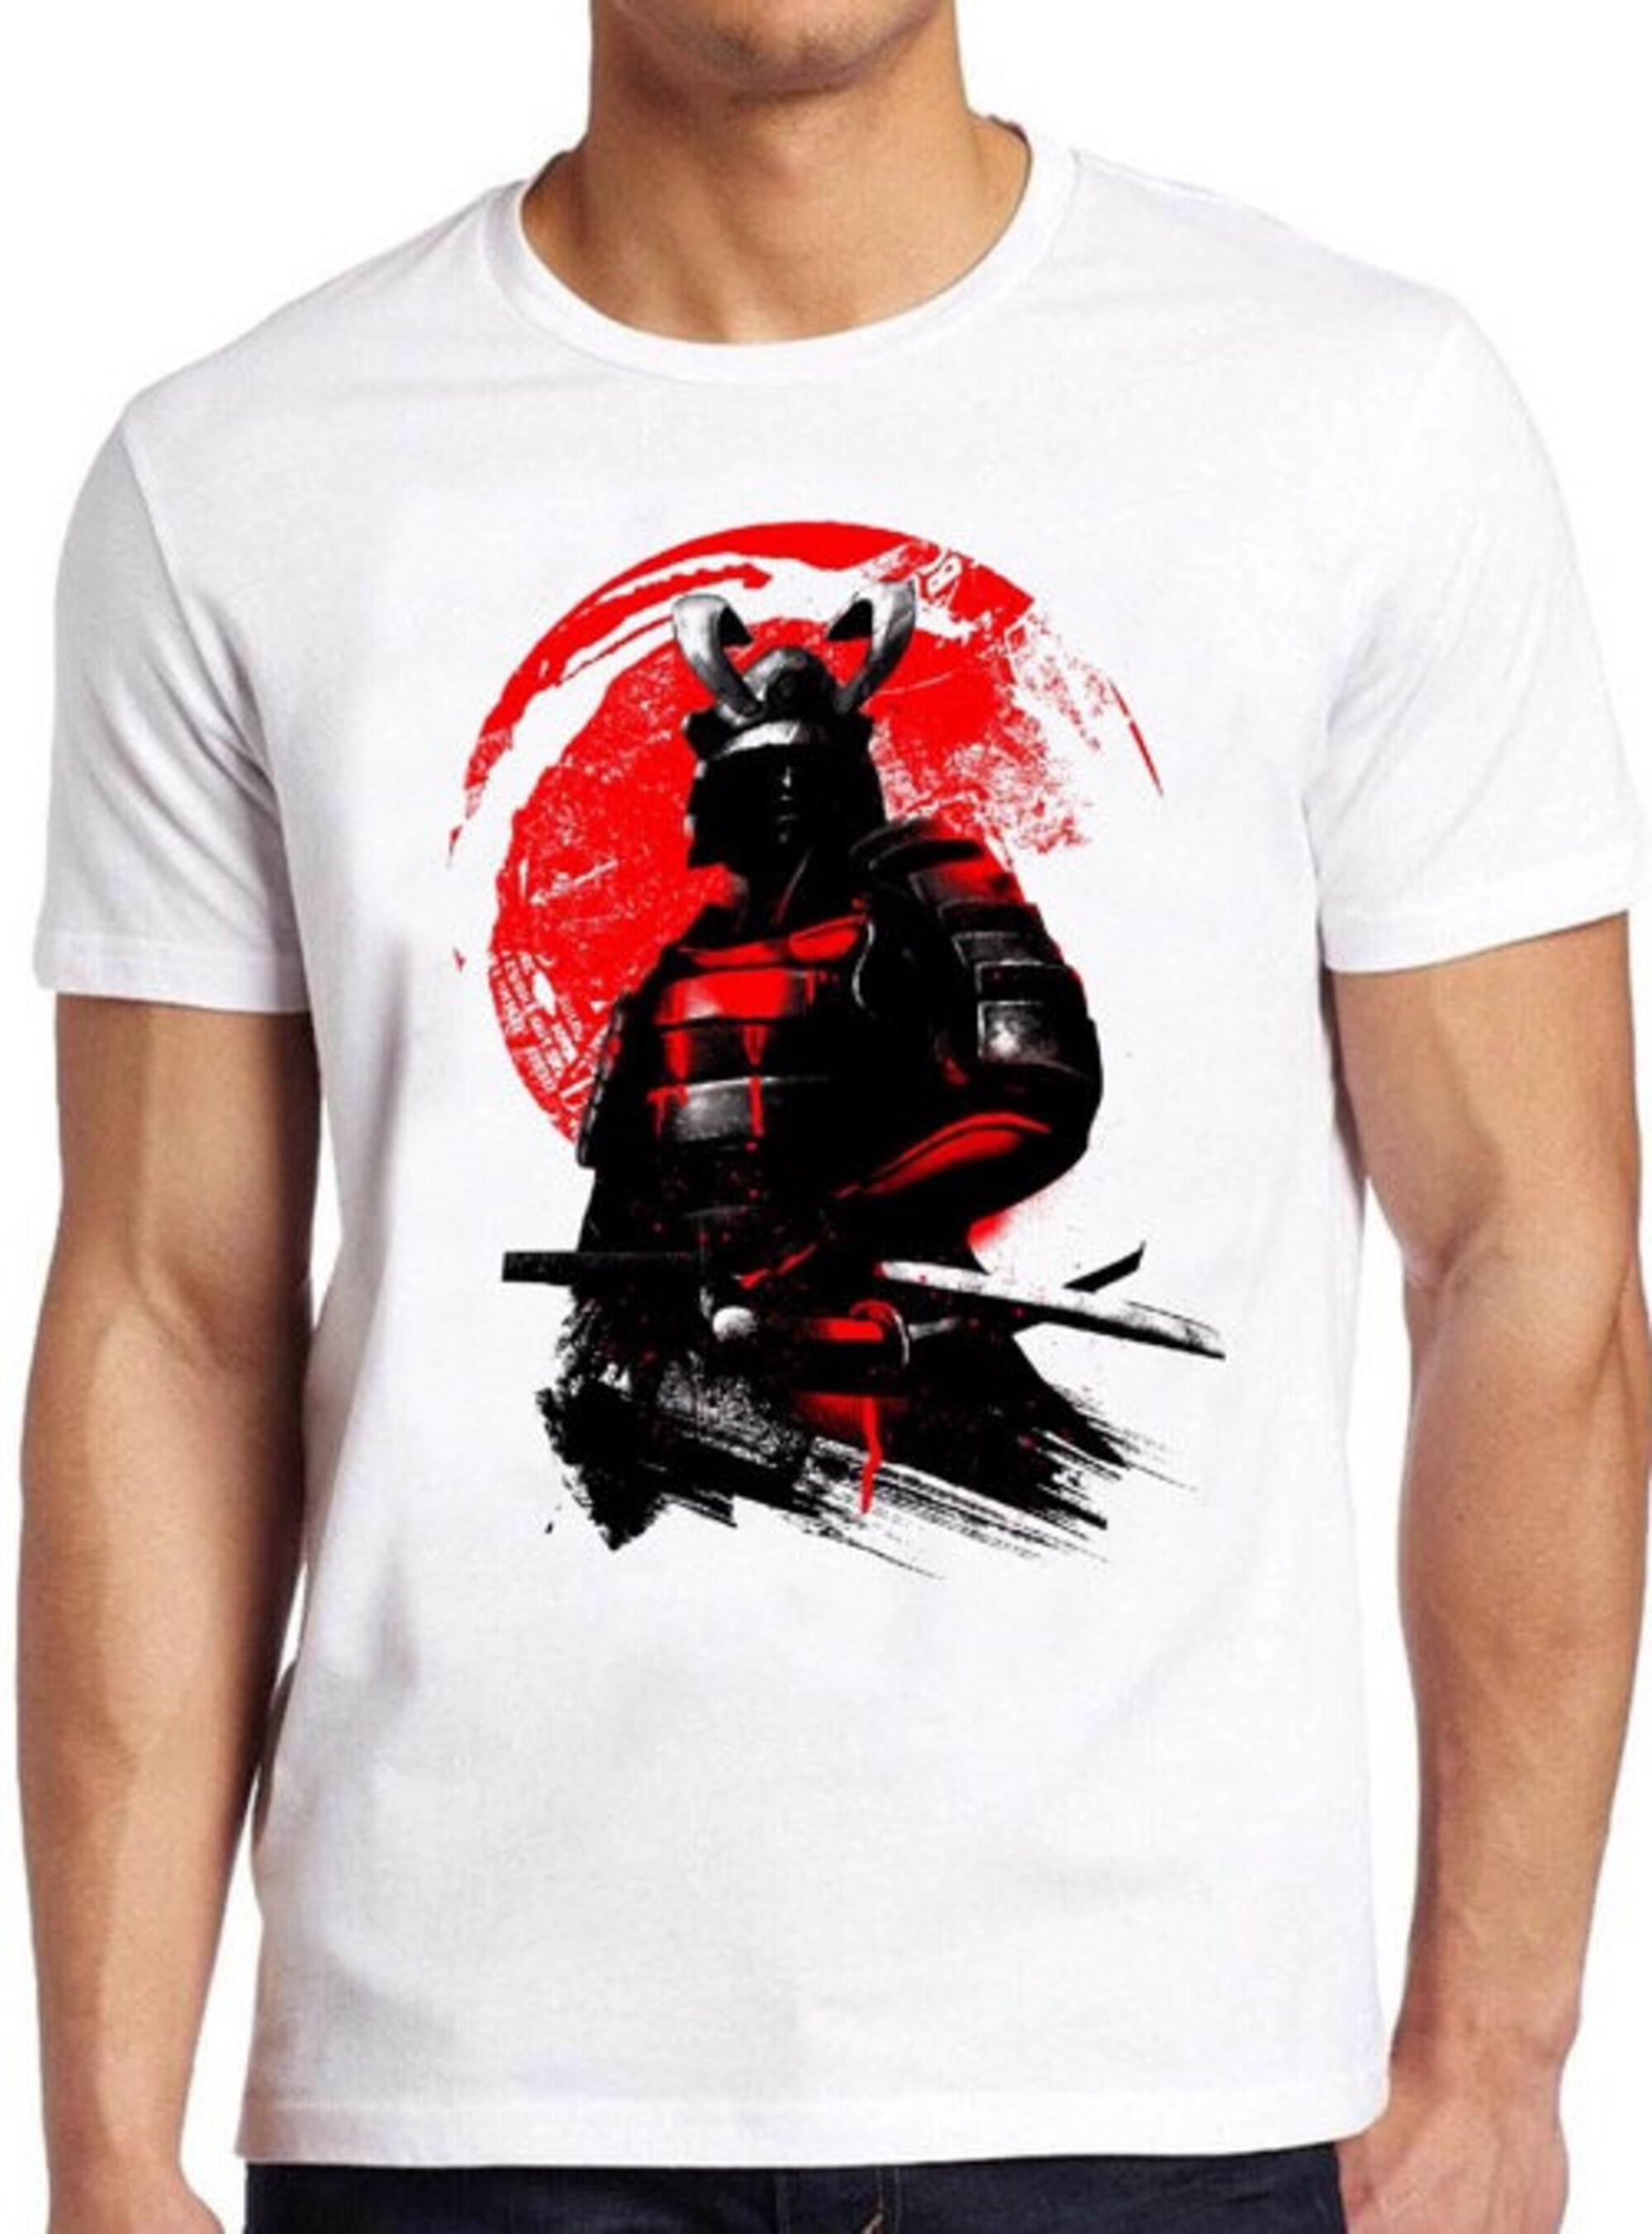 Samurai Warrior T Shirt Spartan Art Graphic Design Cool Gift Tee